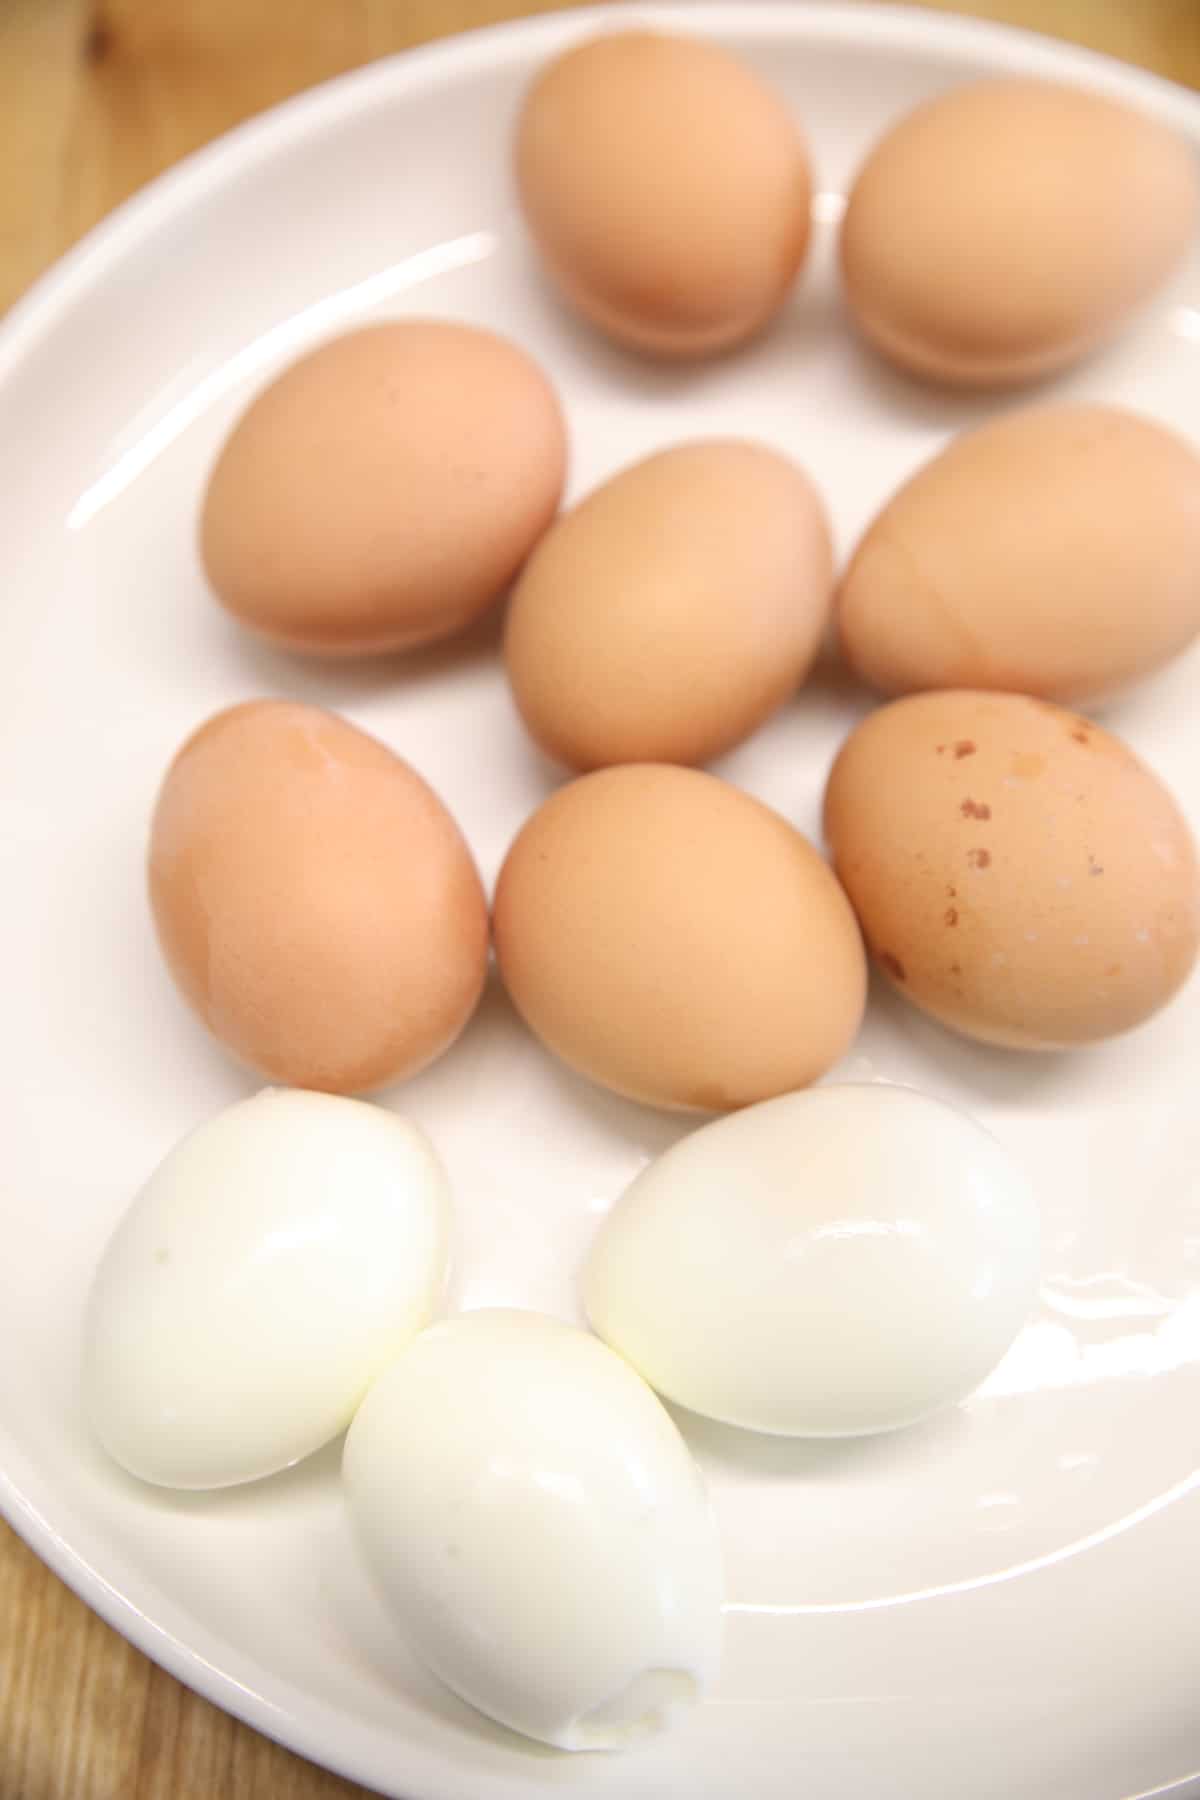 Plate of hard boiled eggs, 3 peeled. 